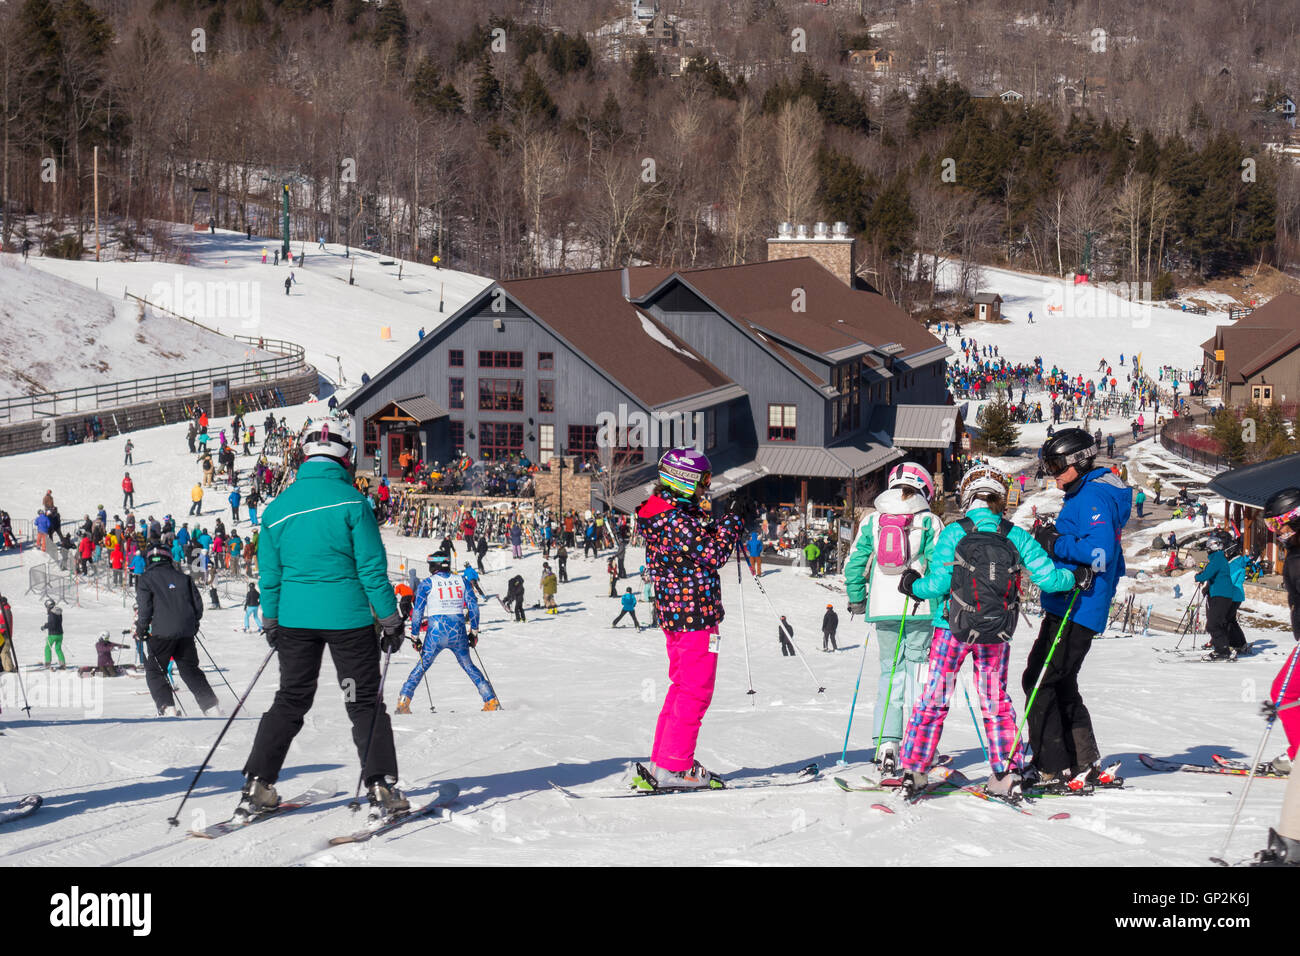 WARREN, VERMONT, USA - Crowd of skiers and lodge, Sugarbush Ski Area. Stock Photo